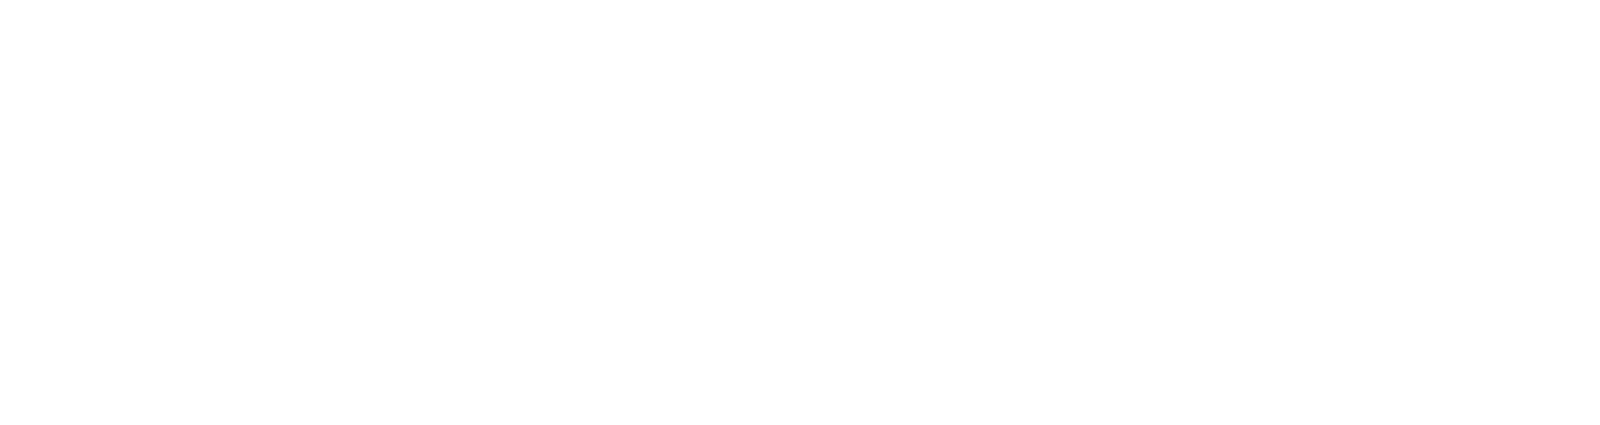 White "Samsung" logo on a black office design background.